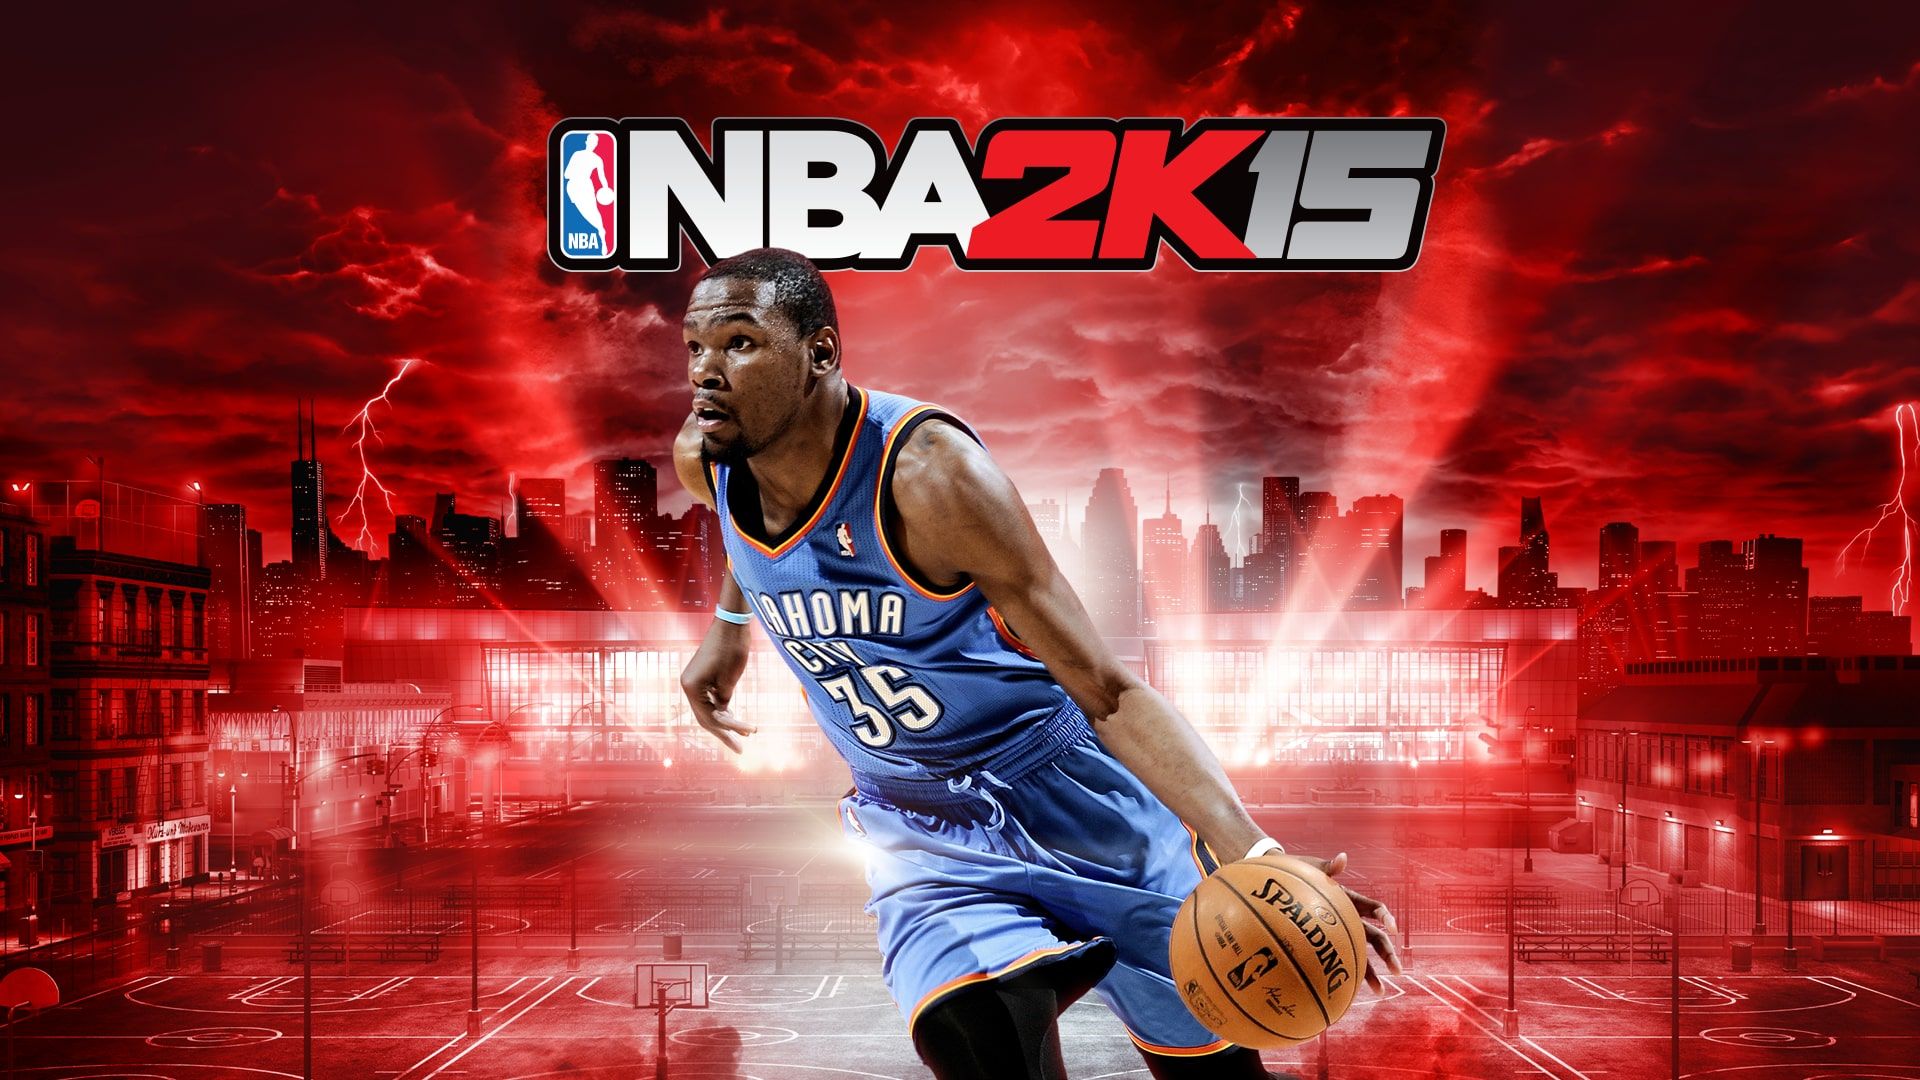 NBA 2K15 cover image